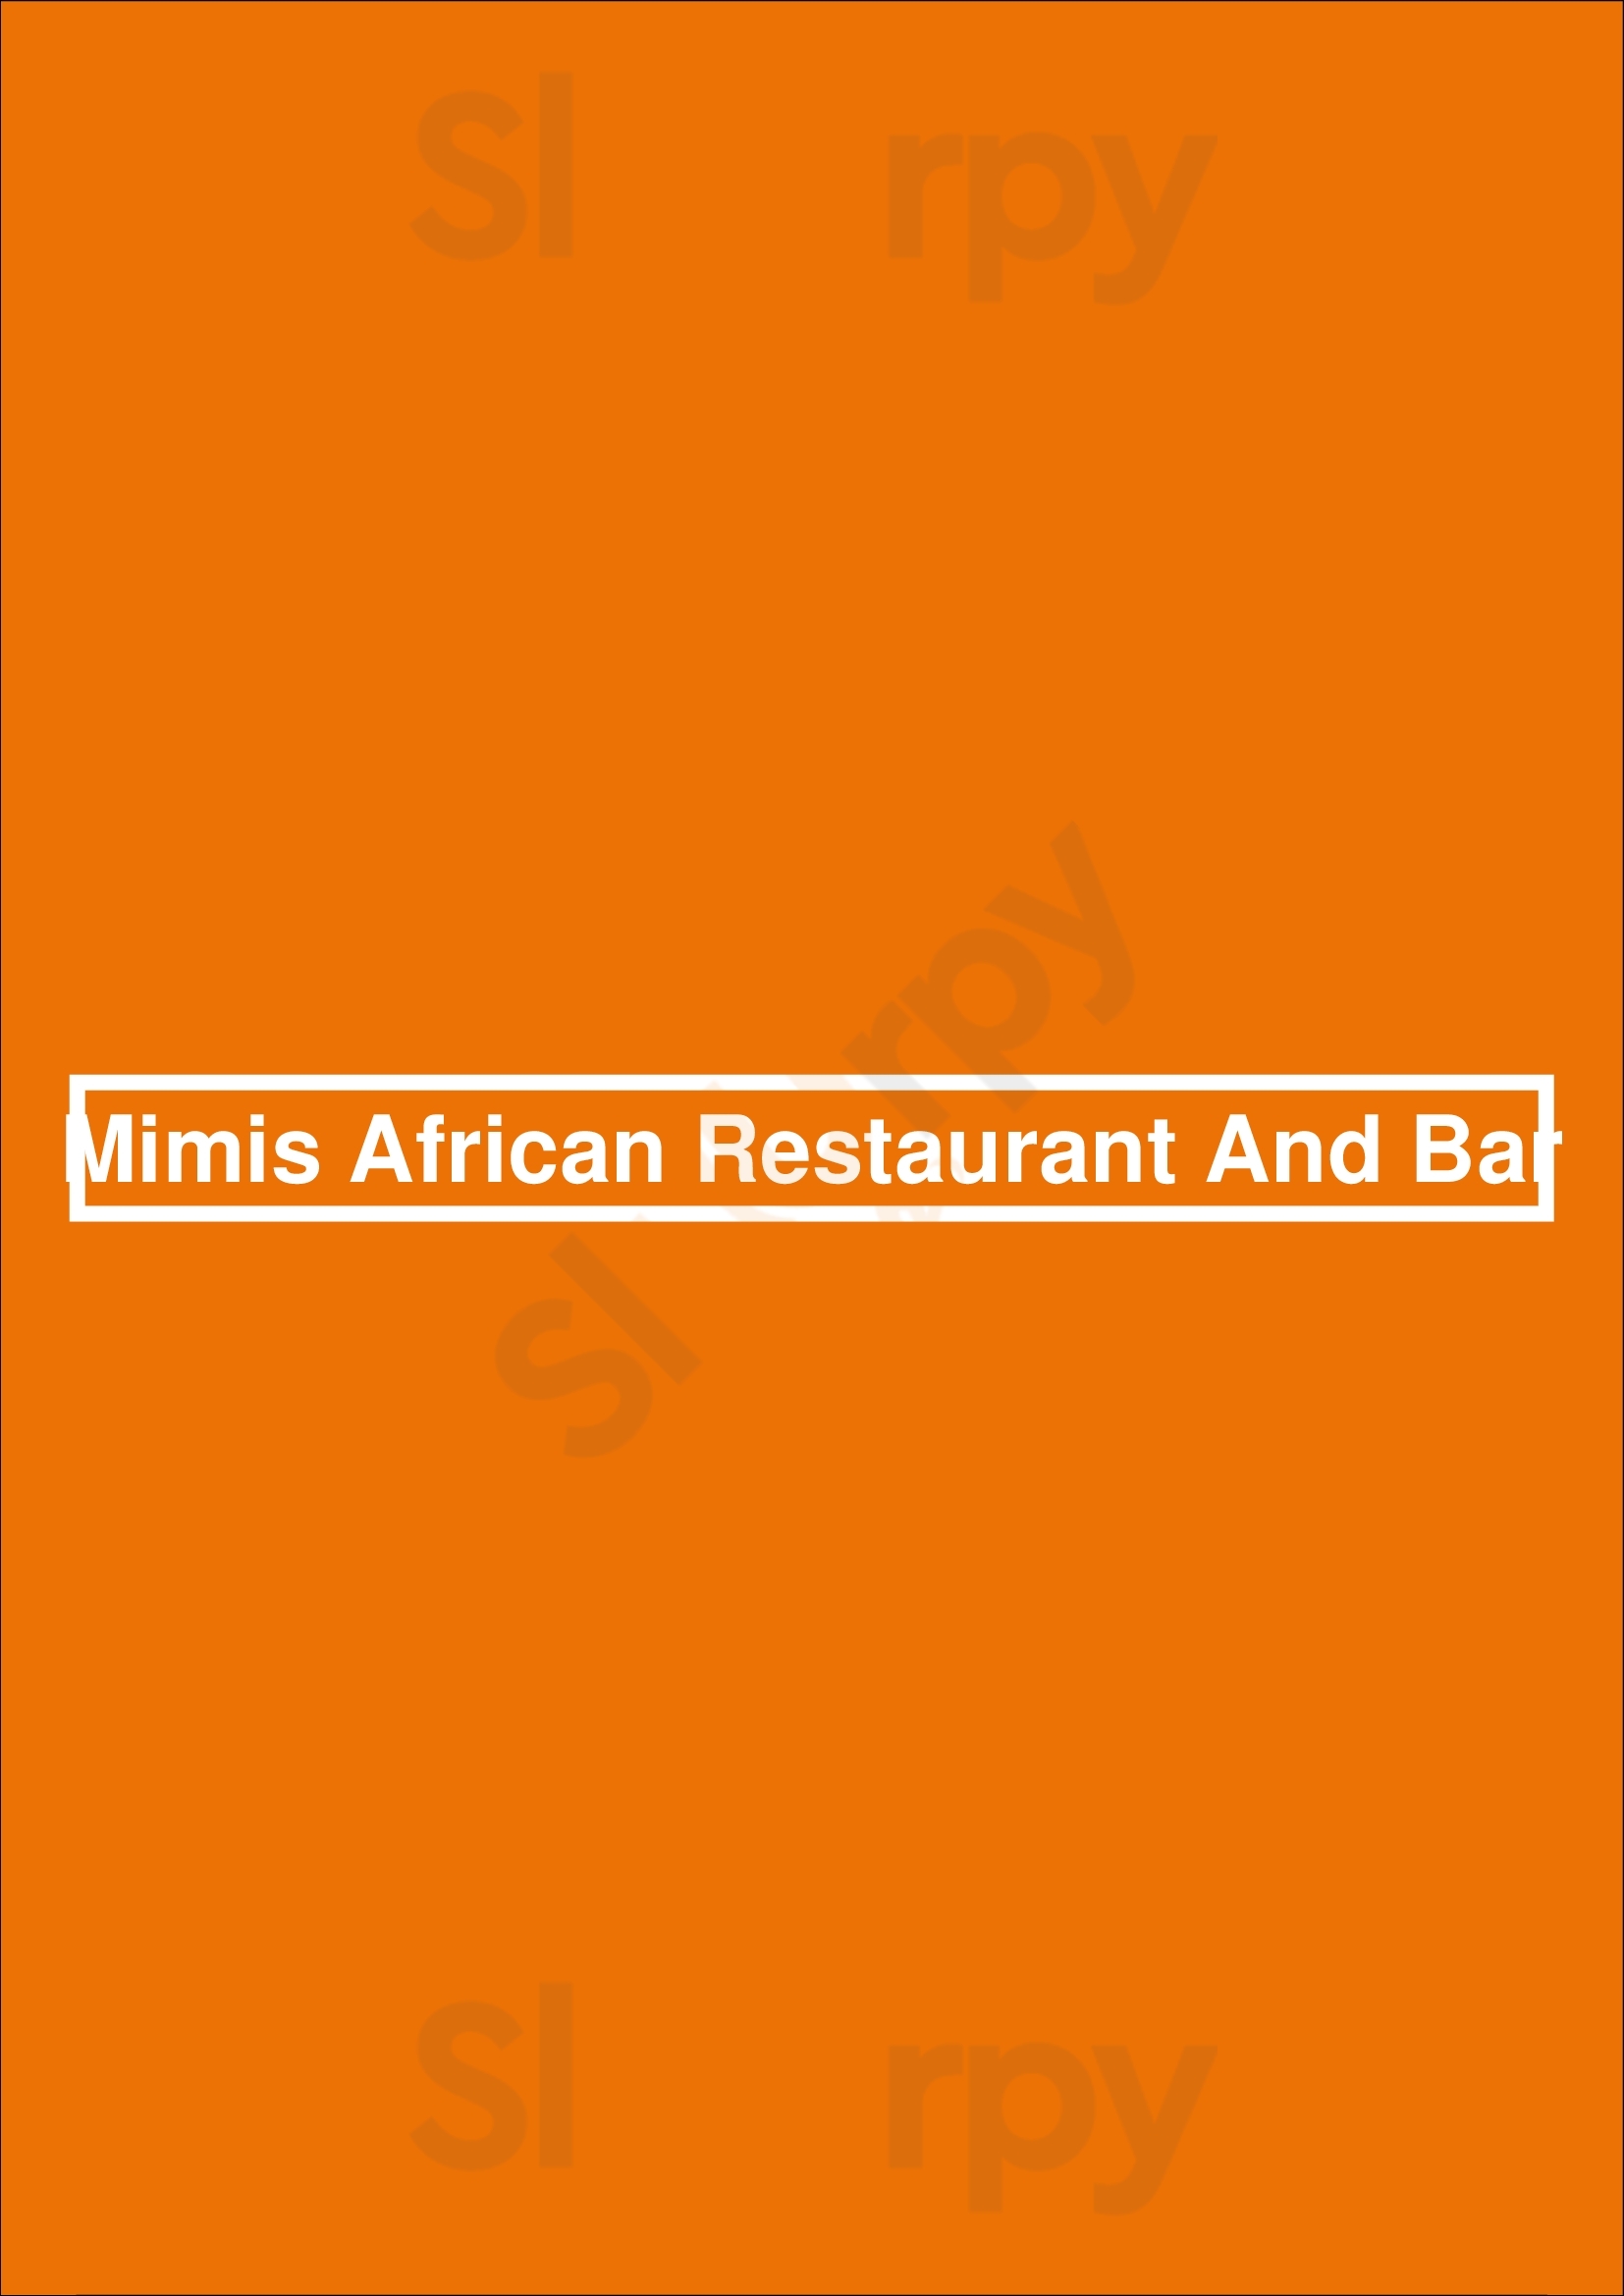 Mimis African Restaurant And Bar Bournemouth Menu - 1